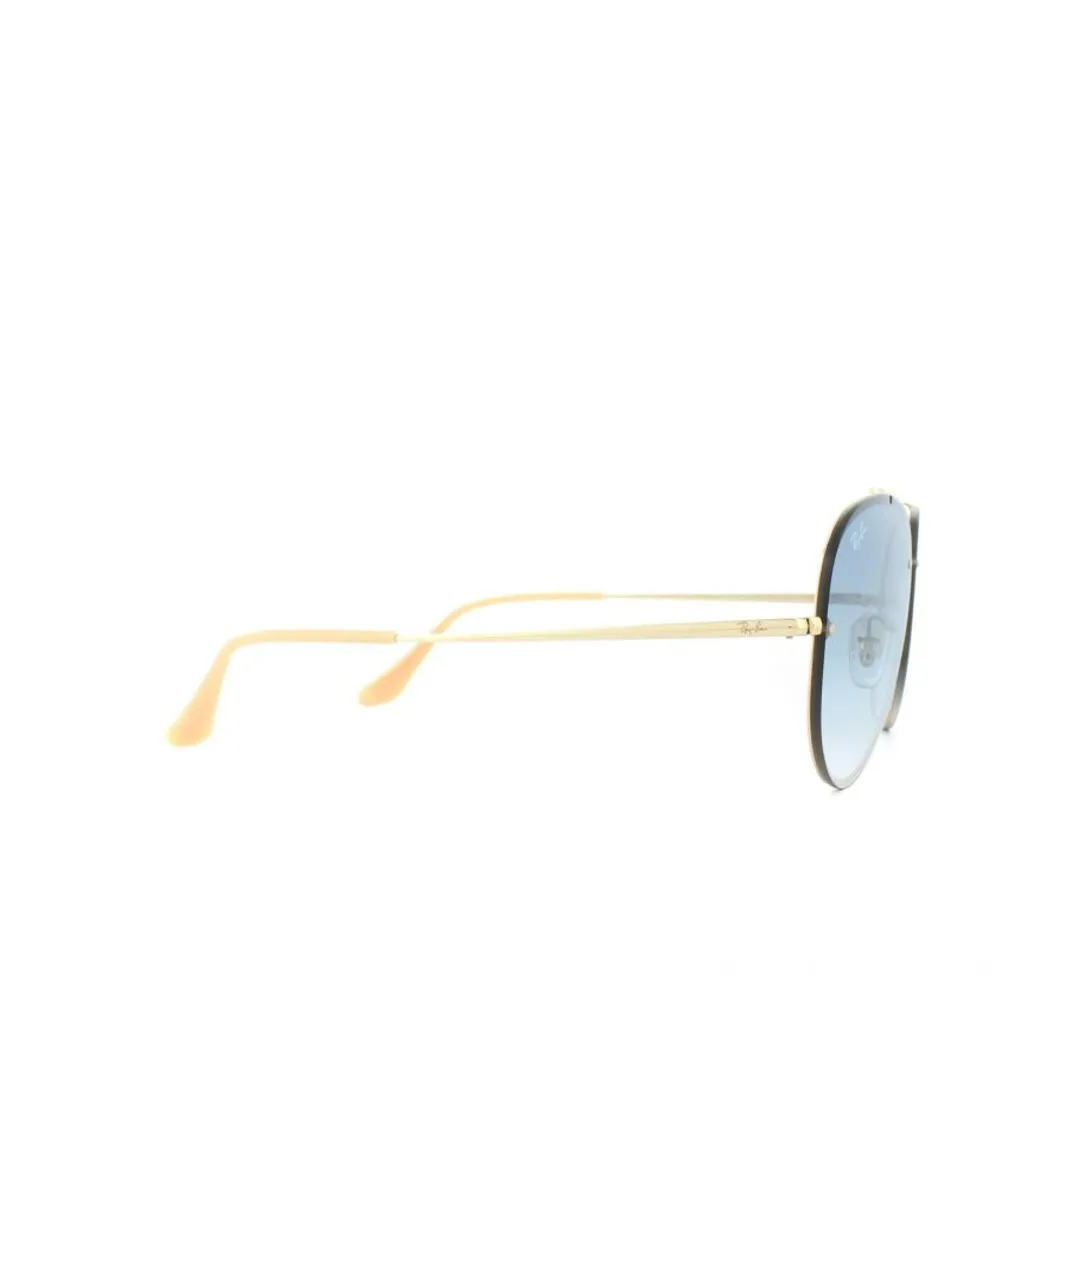 Ray-Ban Womens Sunglasses Blaze Aviator RB3584N 001/19 Gold Light Blue Gradient 58mm Metal - One